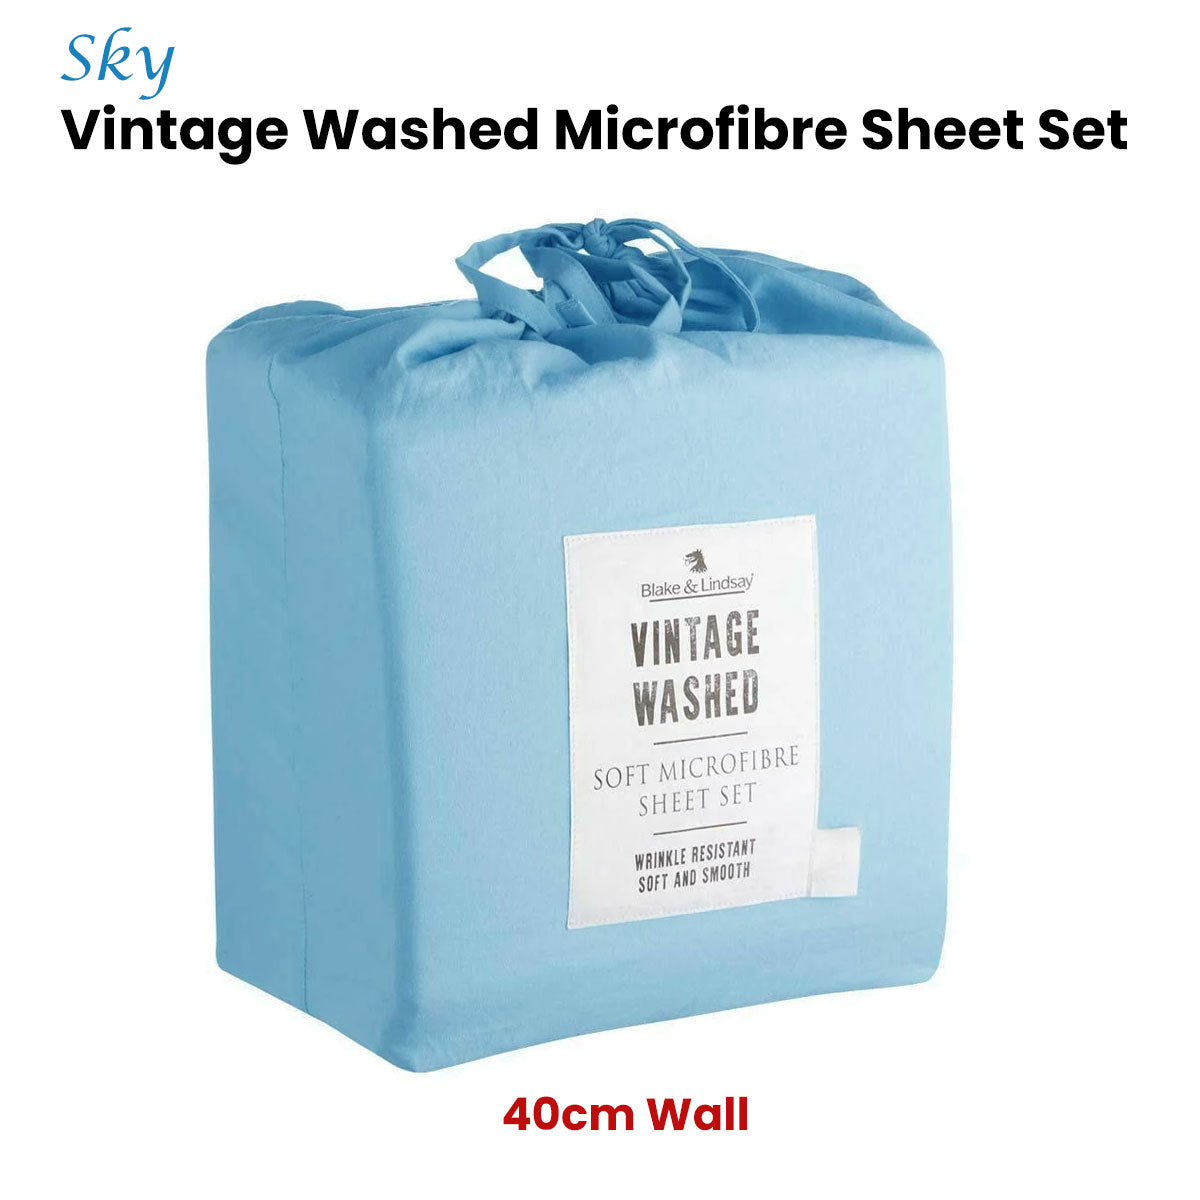 Blake & Lindsay Sky Vintage Washed Microfibre Sheet Set 40cm Wall King